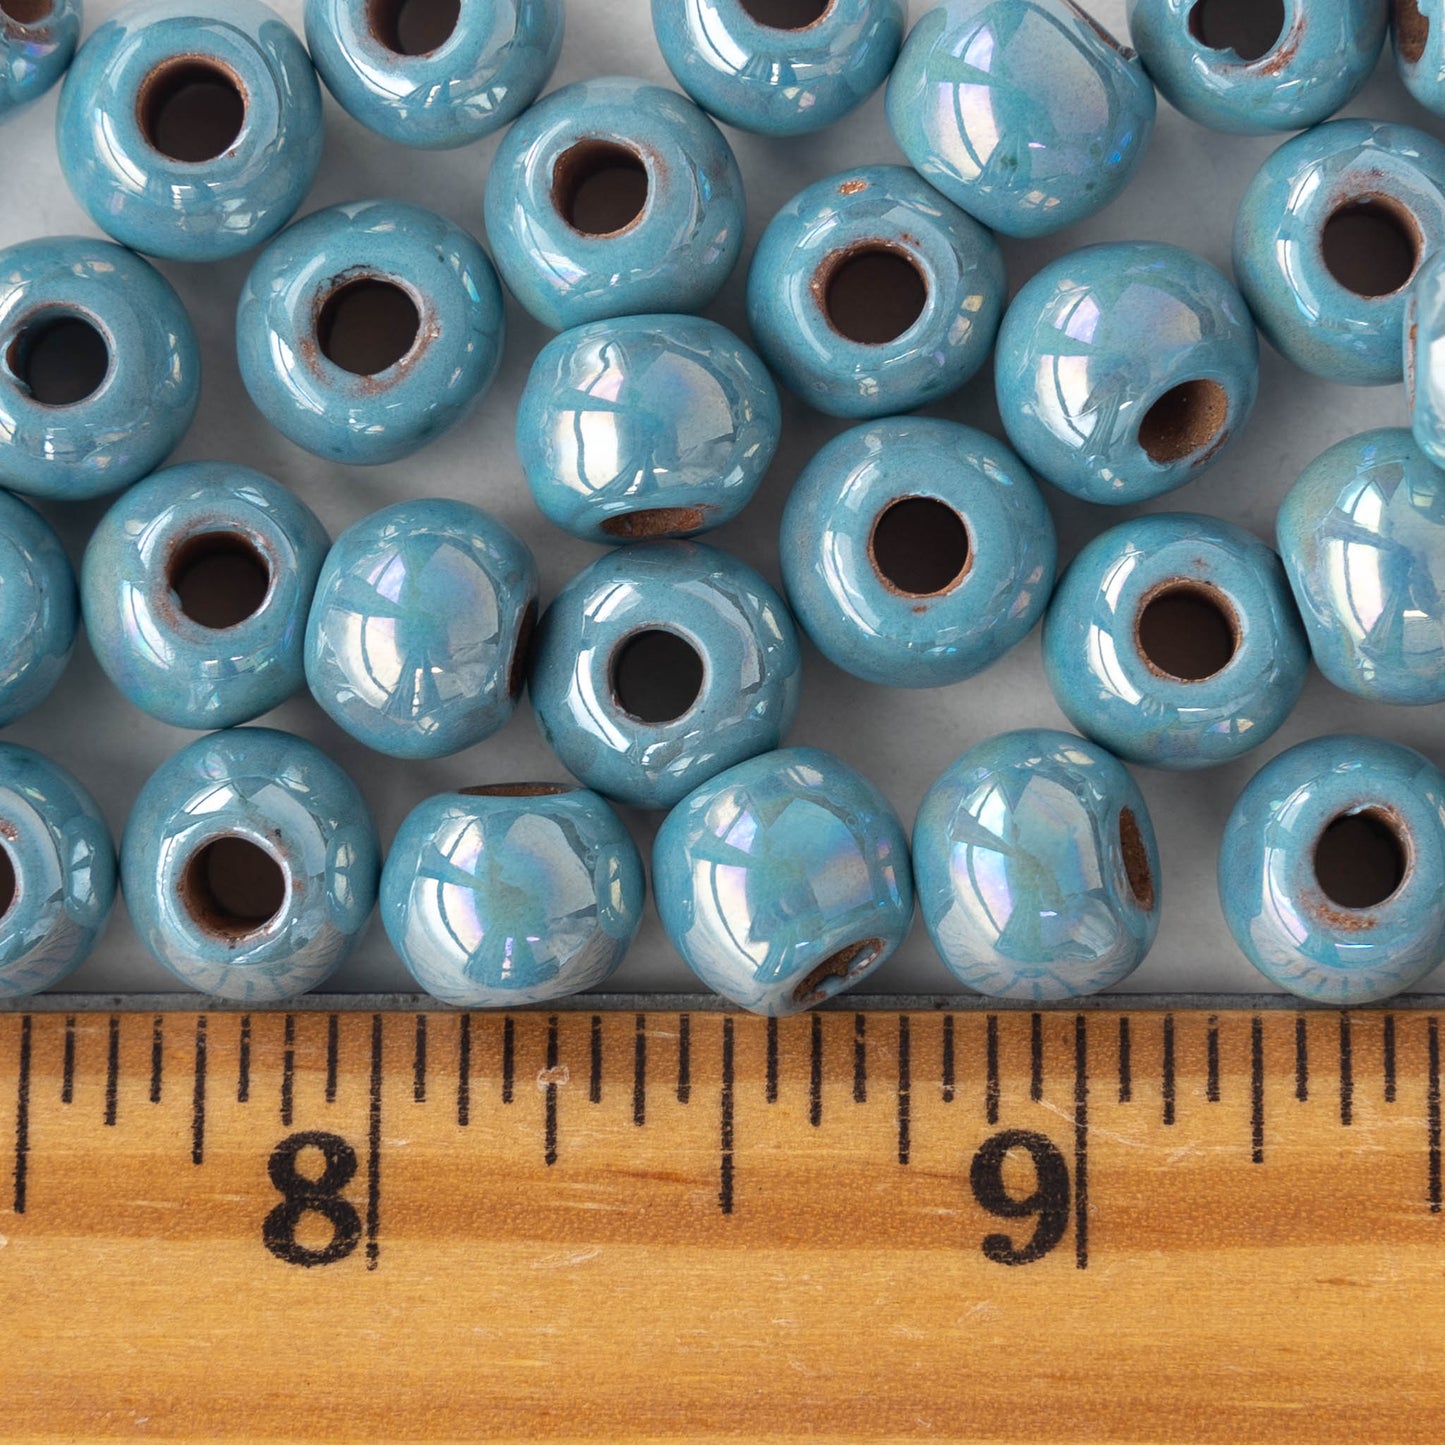 10mm Glazed Ceramic Round Beads - Iridescent Light Blue